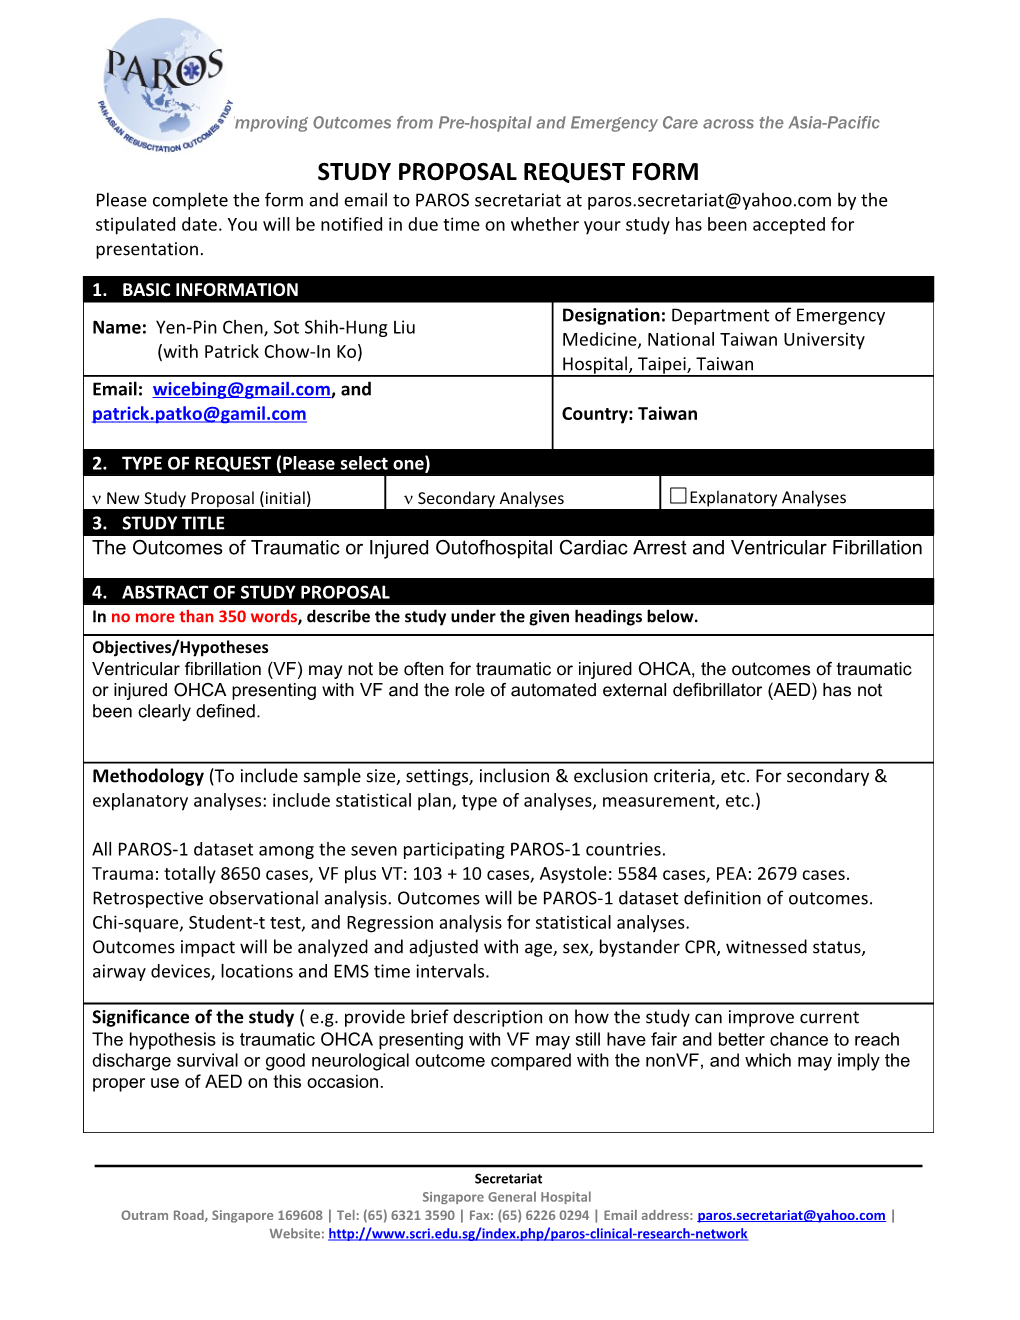 Study Proposal Request Form